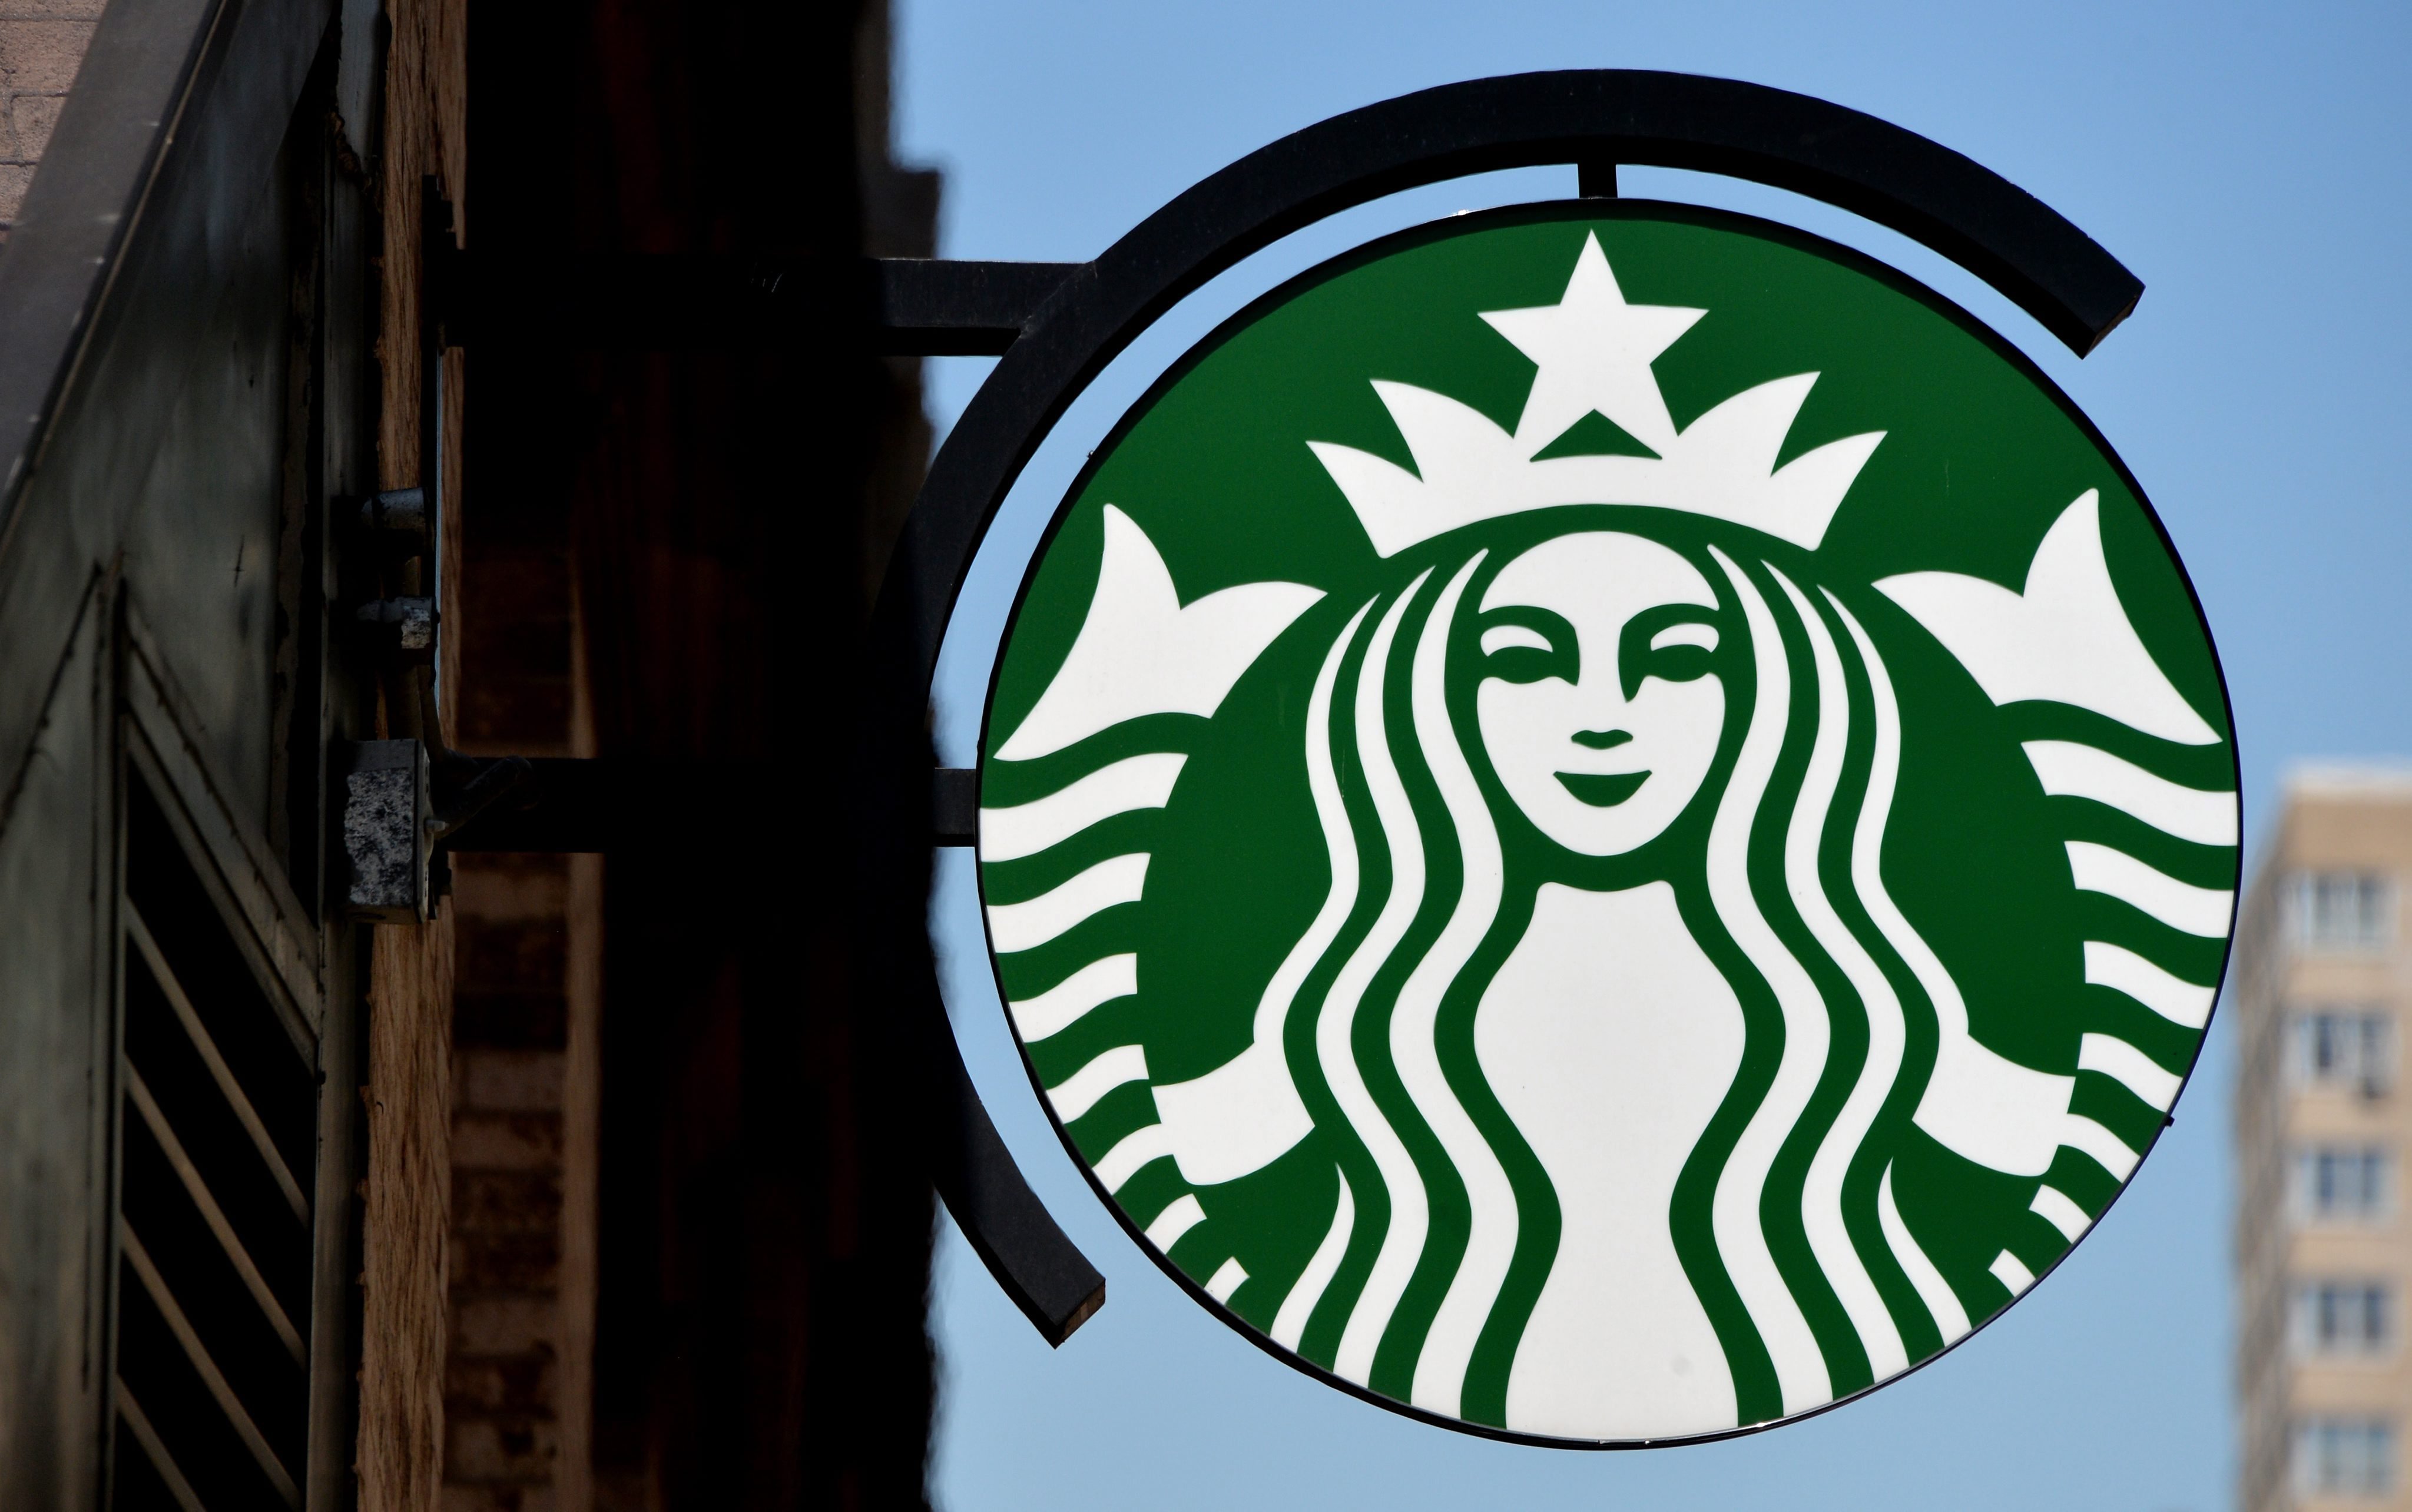 A Starbucks sign in New York City on June 16, 2014.